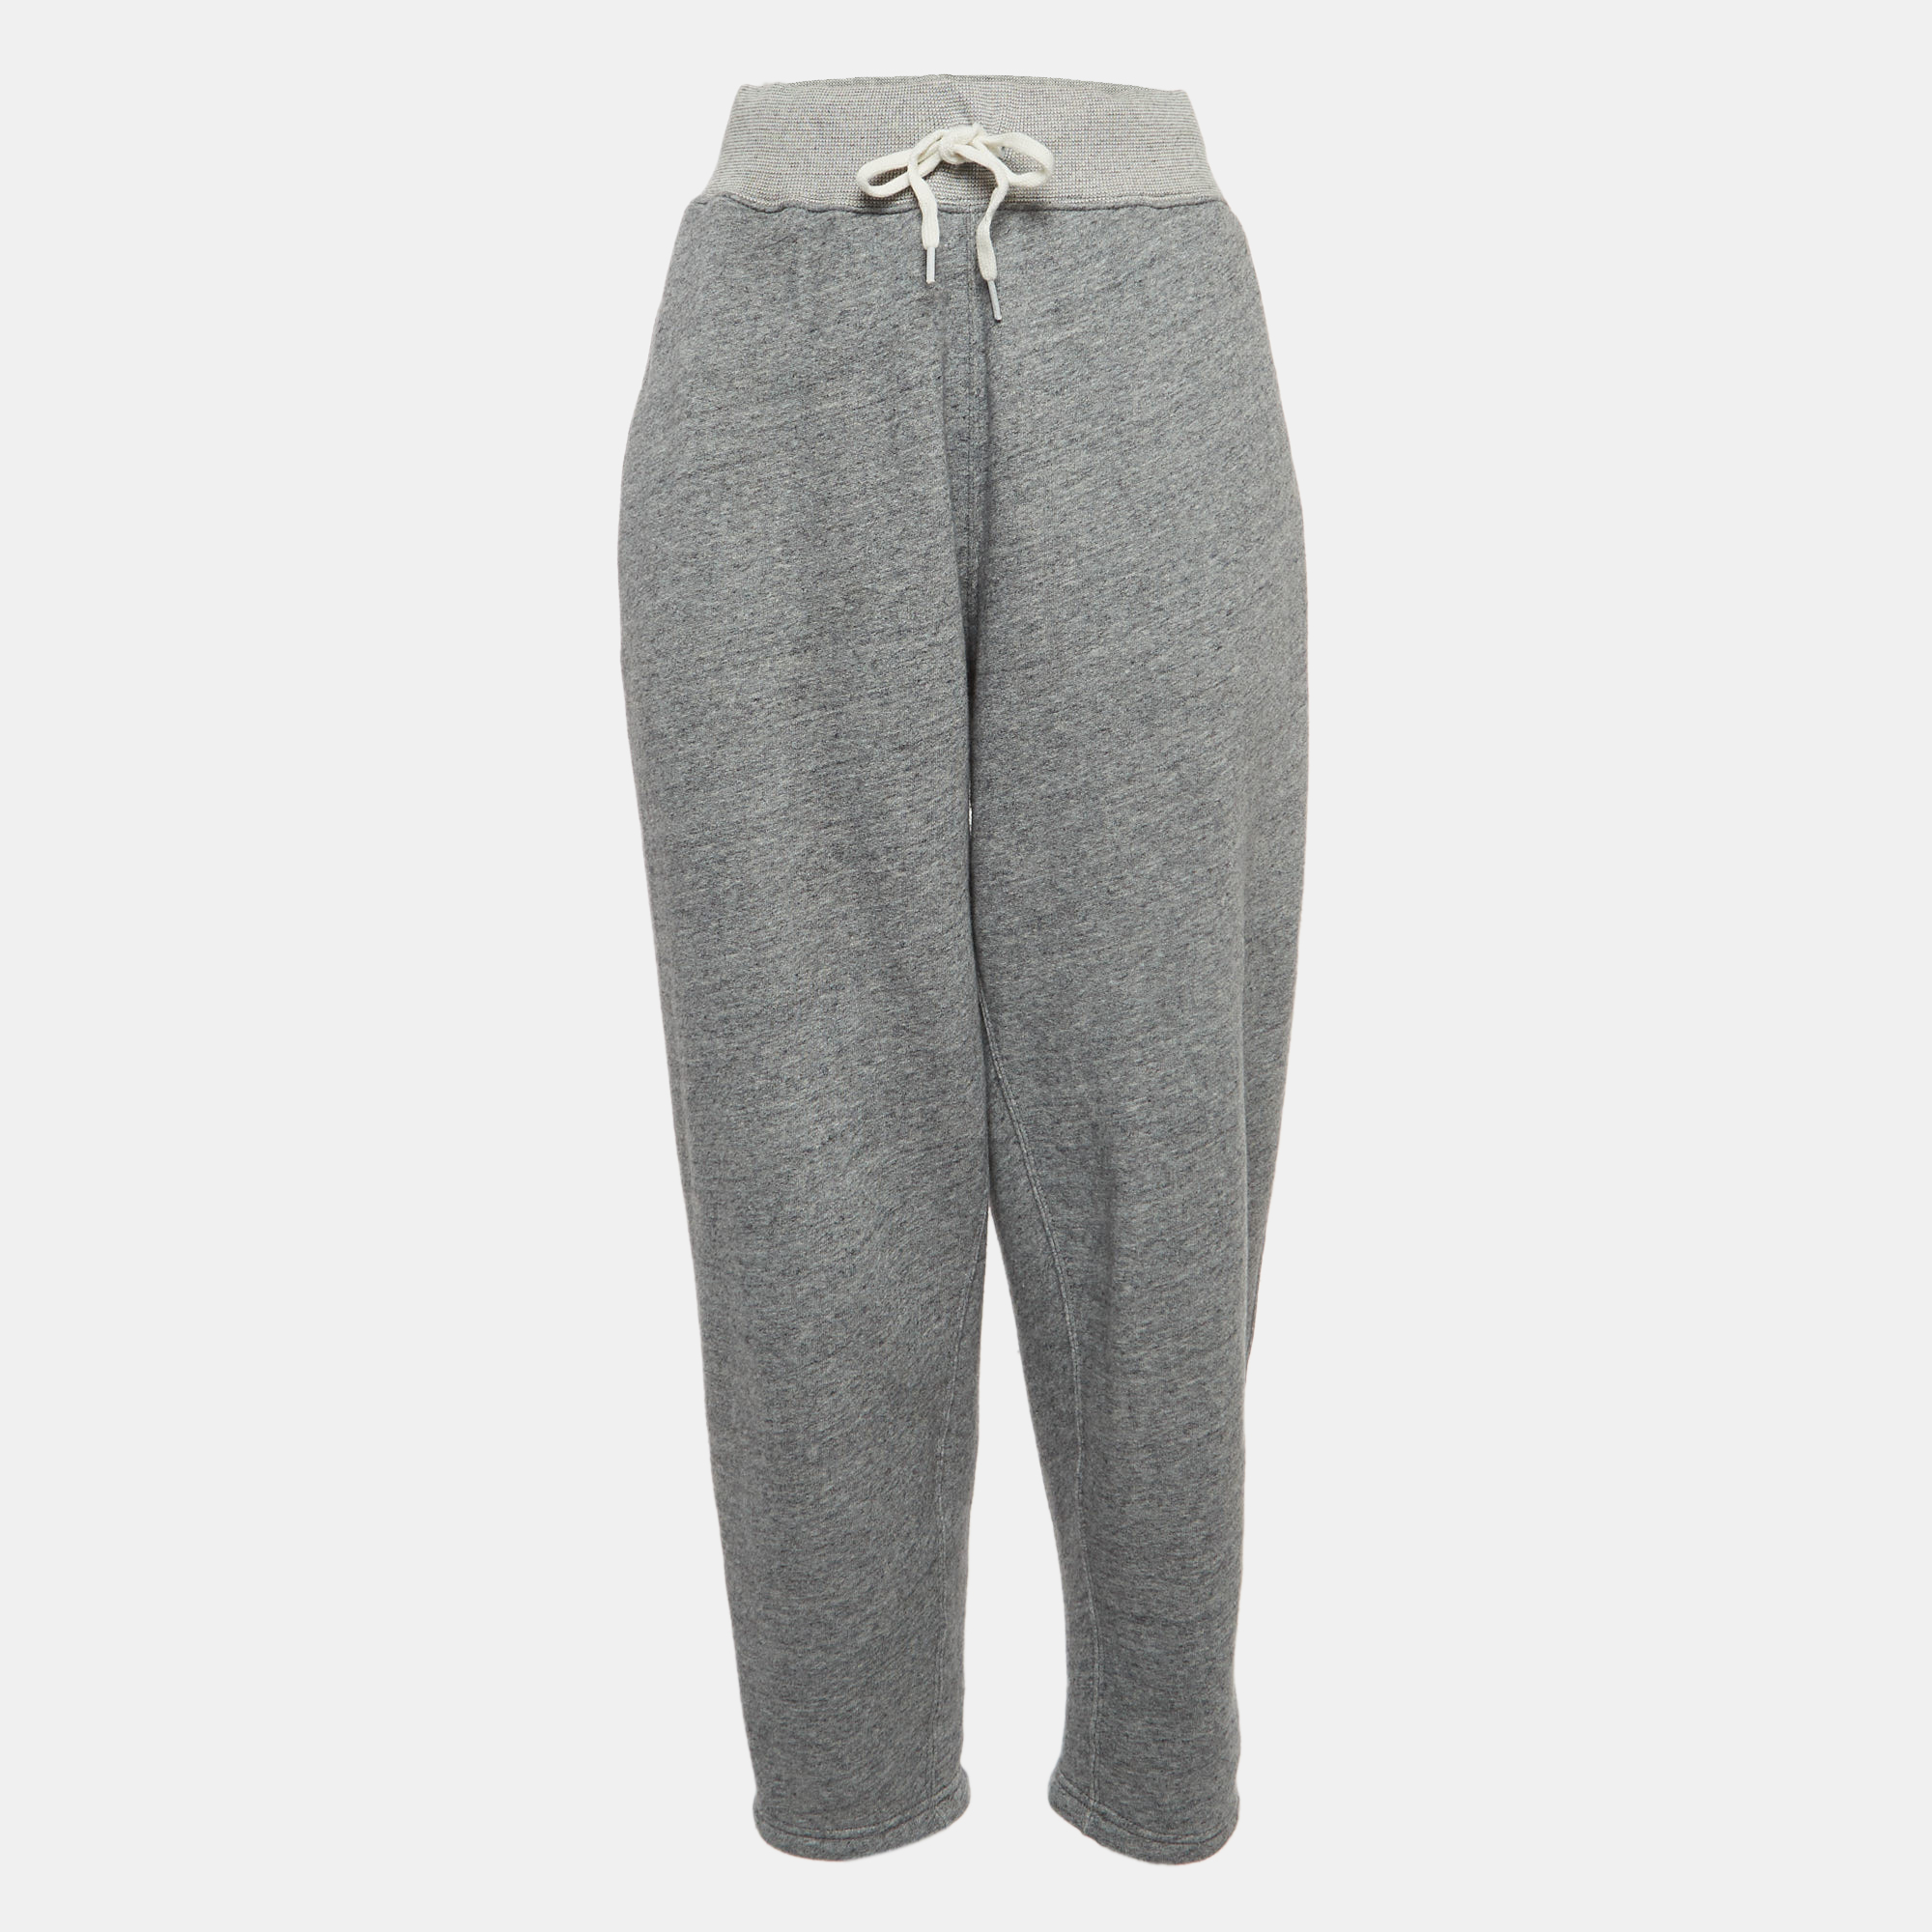 Polo ralph lauren grey logo embroidered fleece cotton track pants m